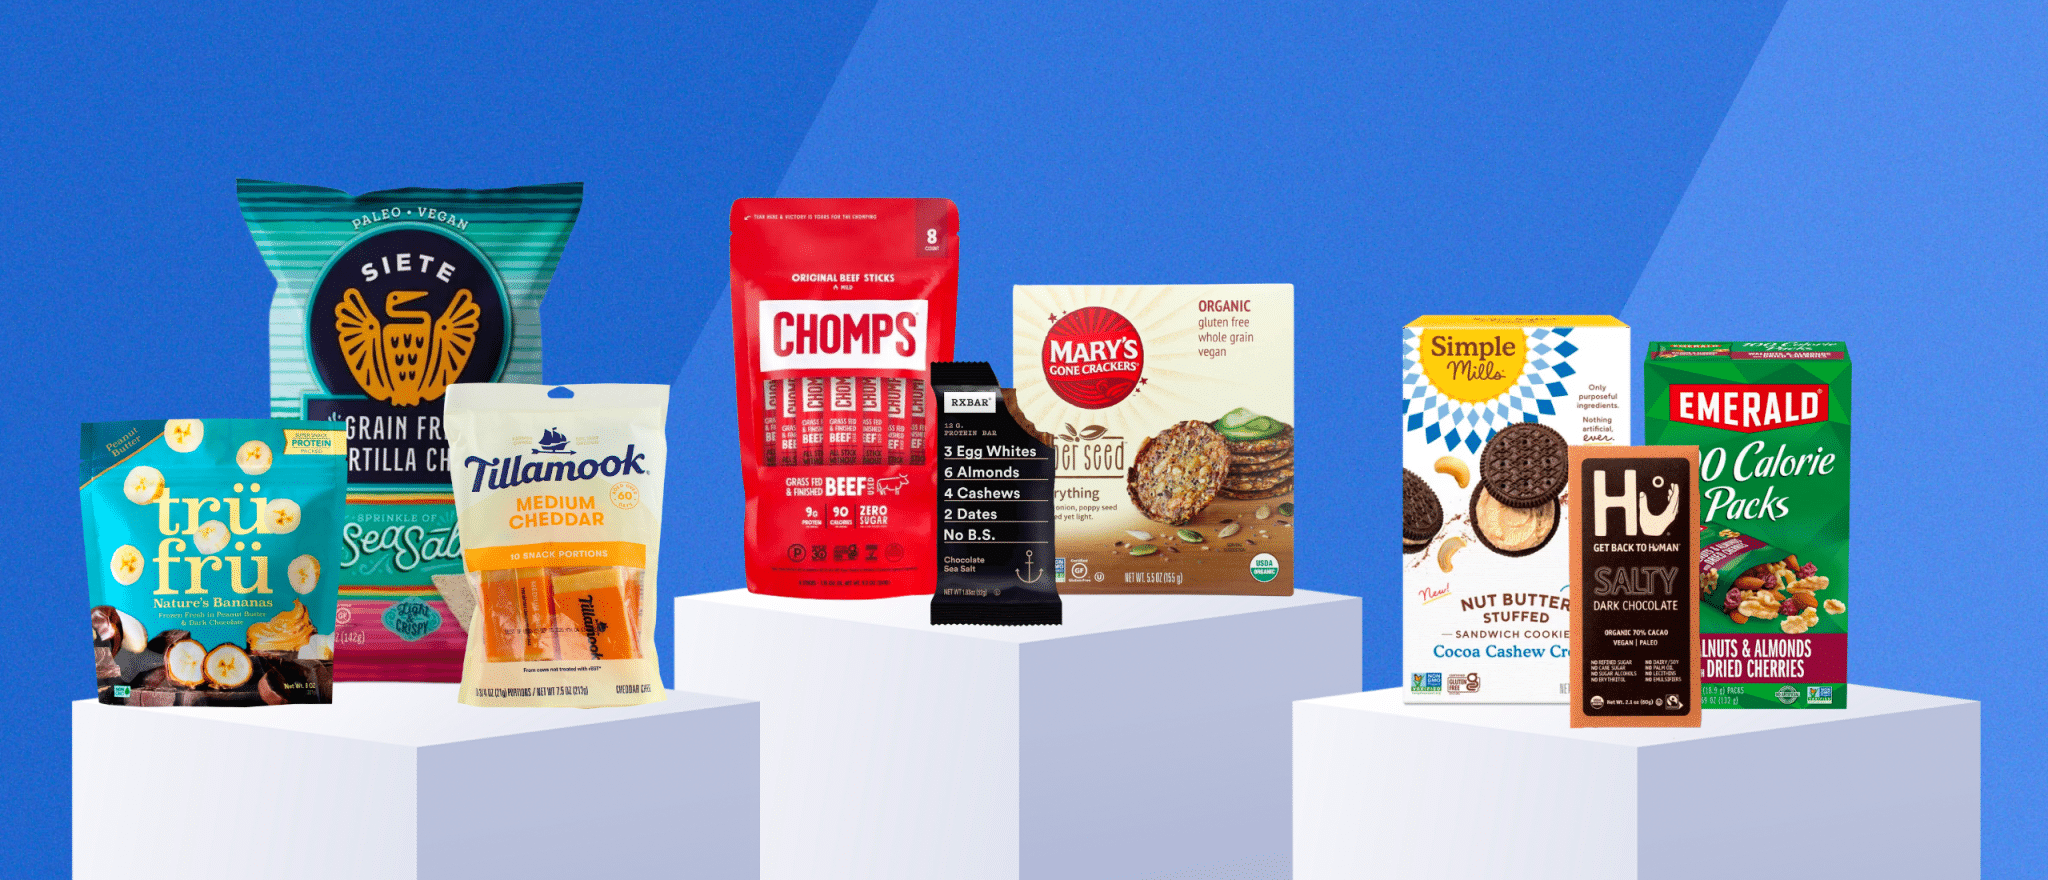 25 Healthy Snacks at Walmart That Won’t Break the Bank